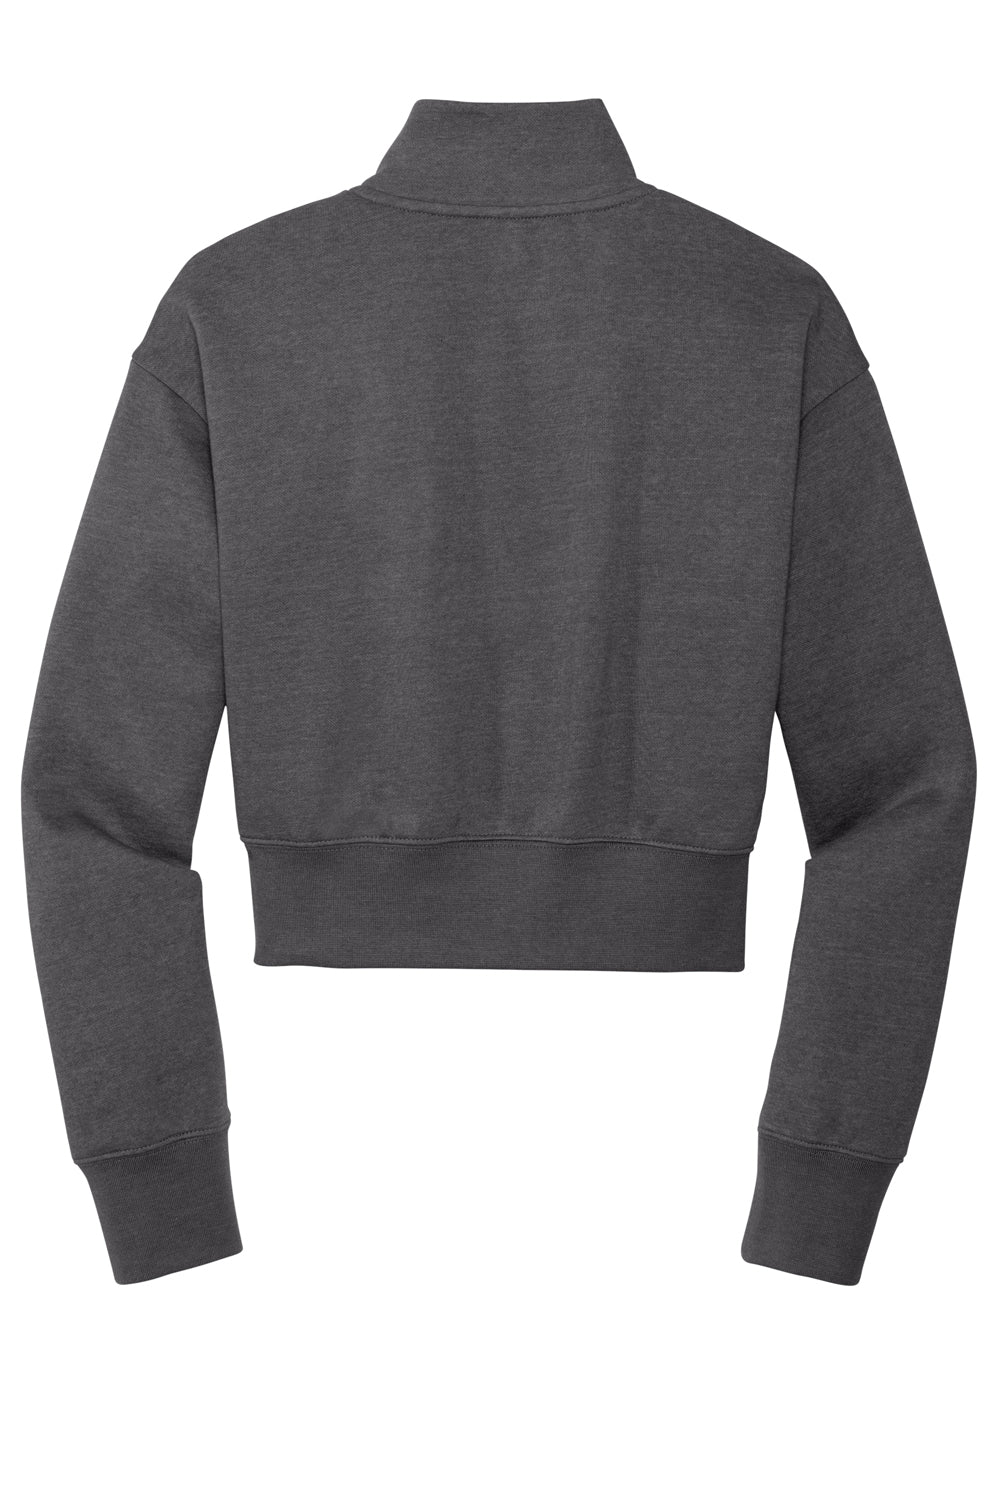 District DT6111 V.I.T. Fleece 1/4 Zip Sweatshirt Heathered Charcoal Grey Flat Back